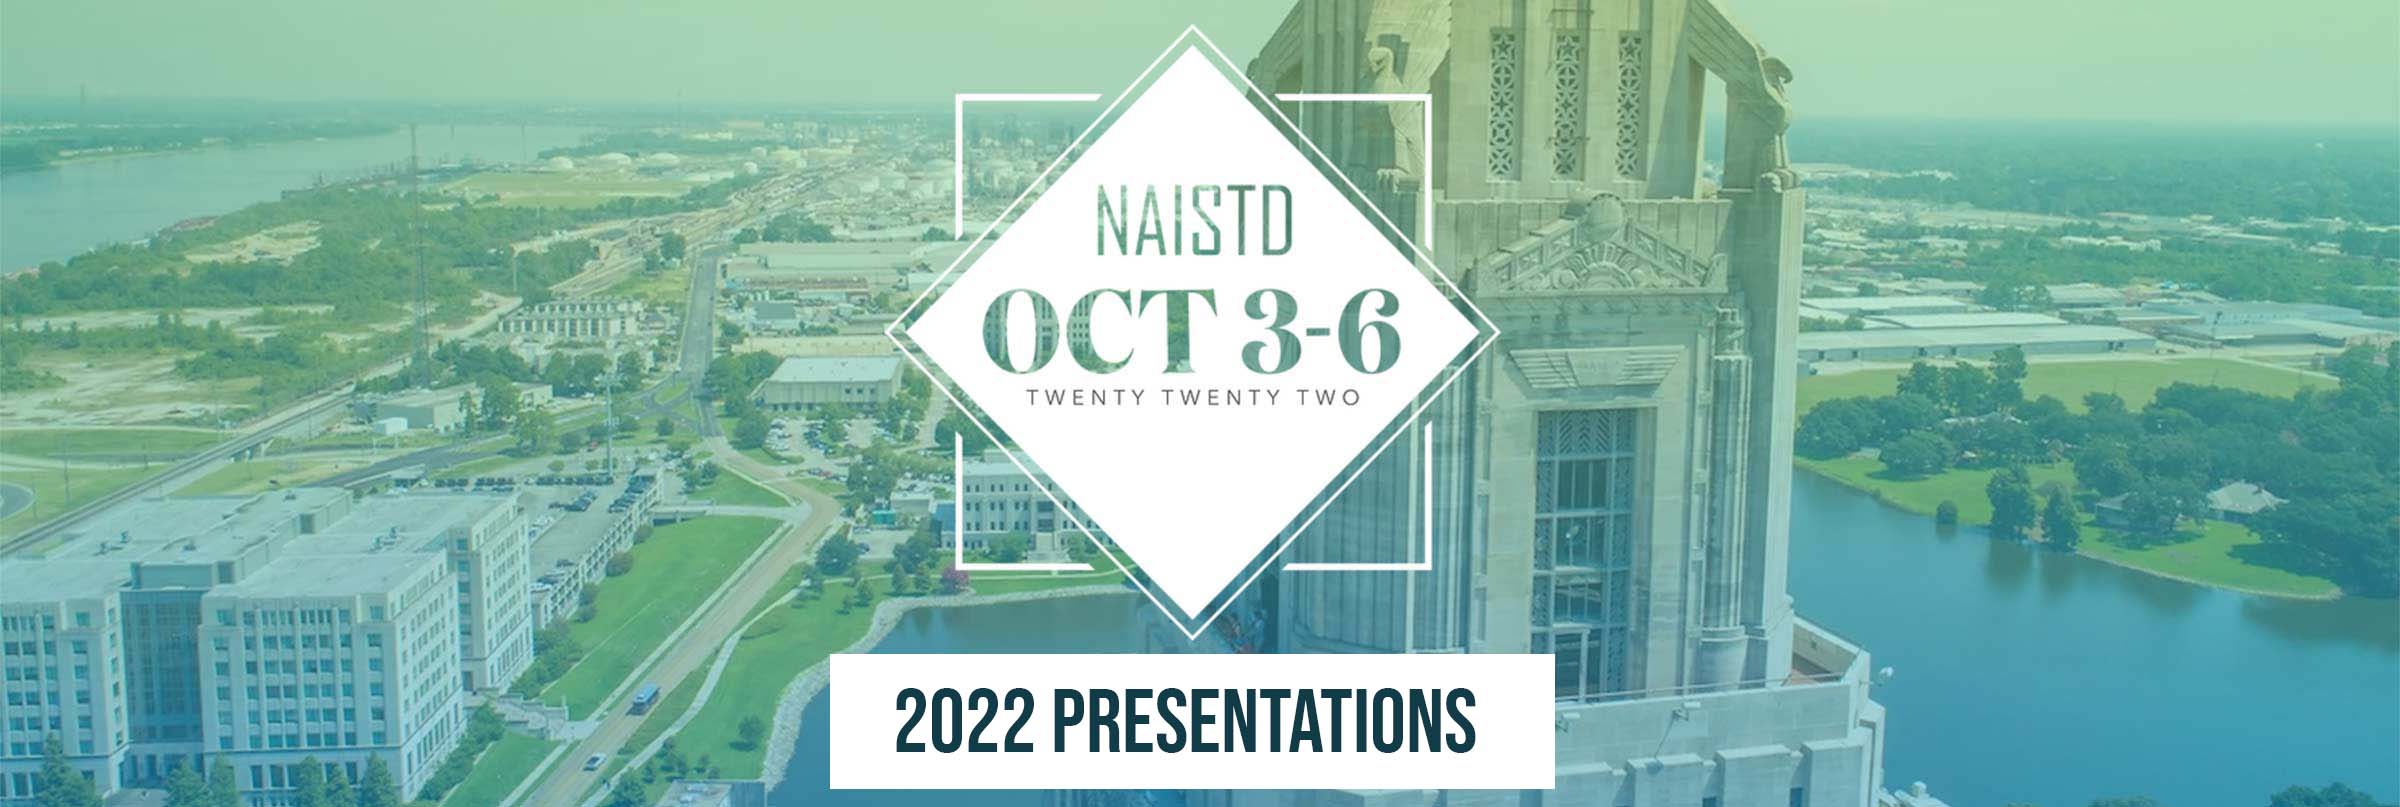 NAISTD - 2022 Presentations - graphic header